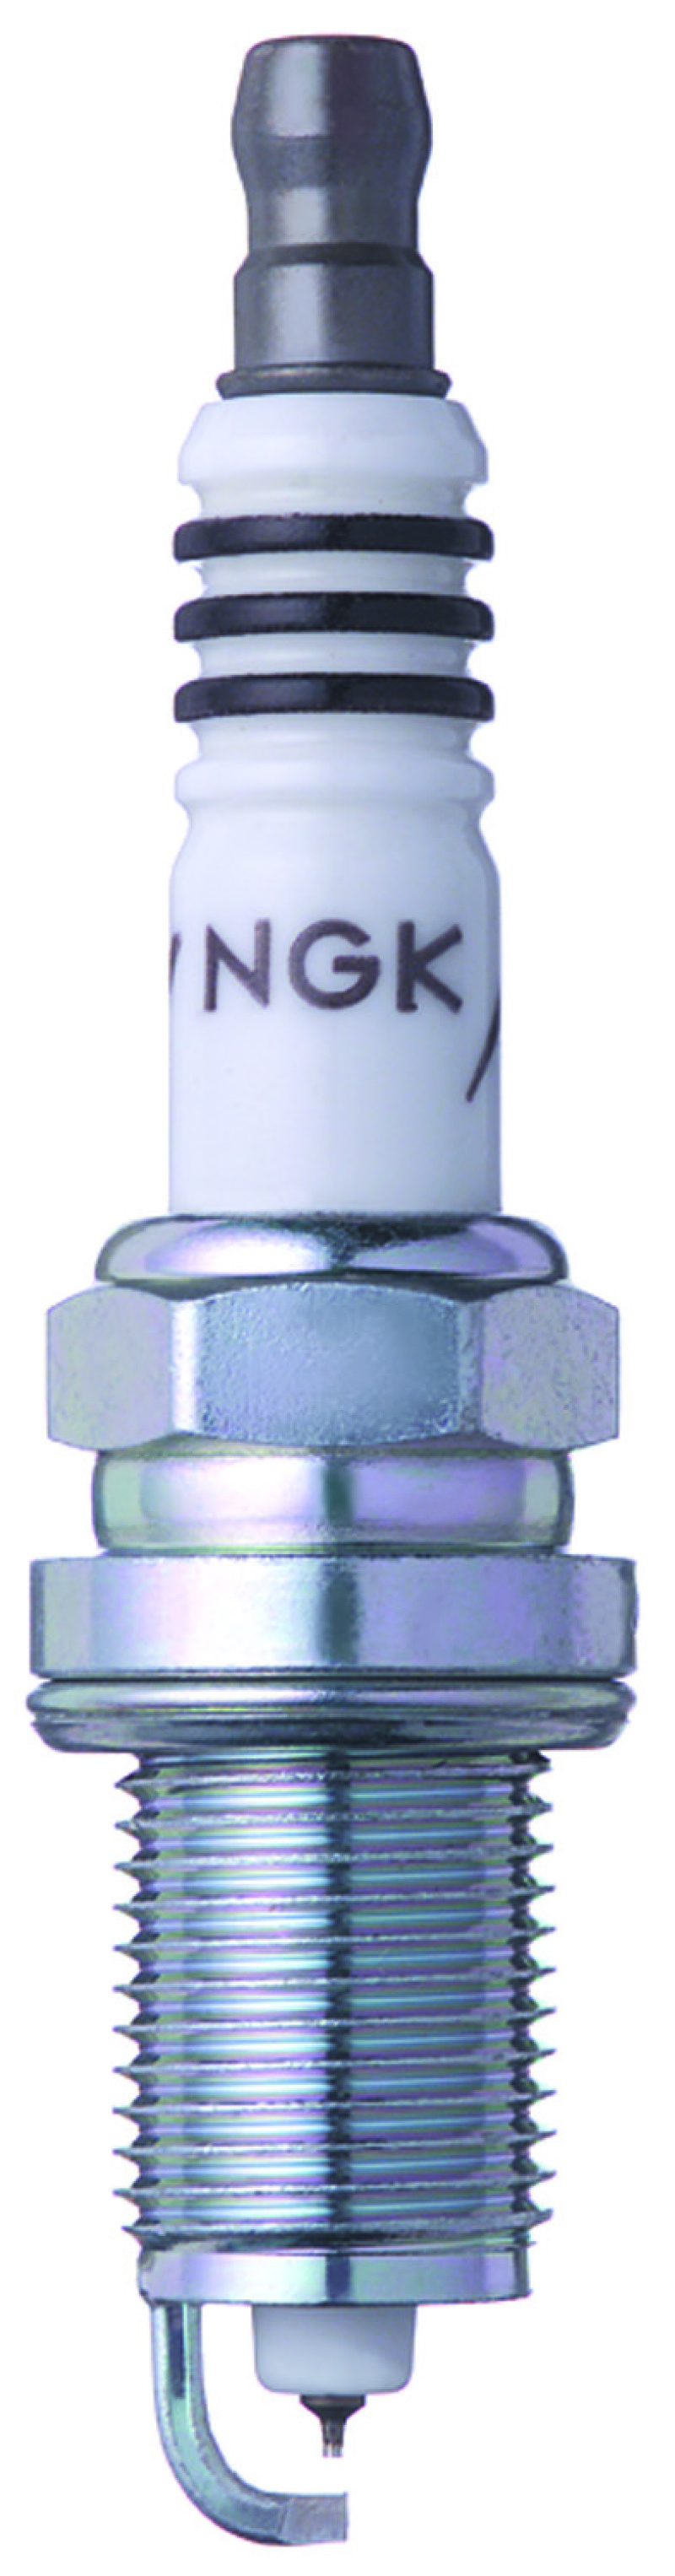 NGK Laser Iridium Spark Plug Box of 4 (IZFR5G) - 5887